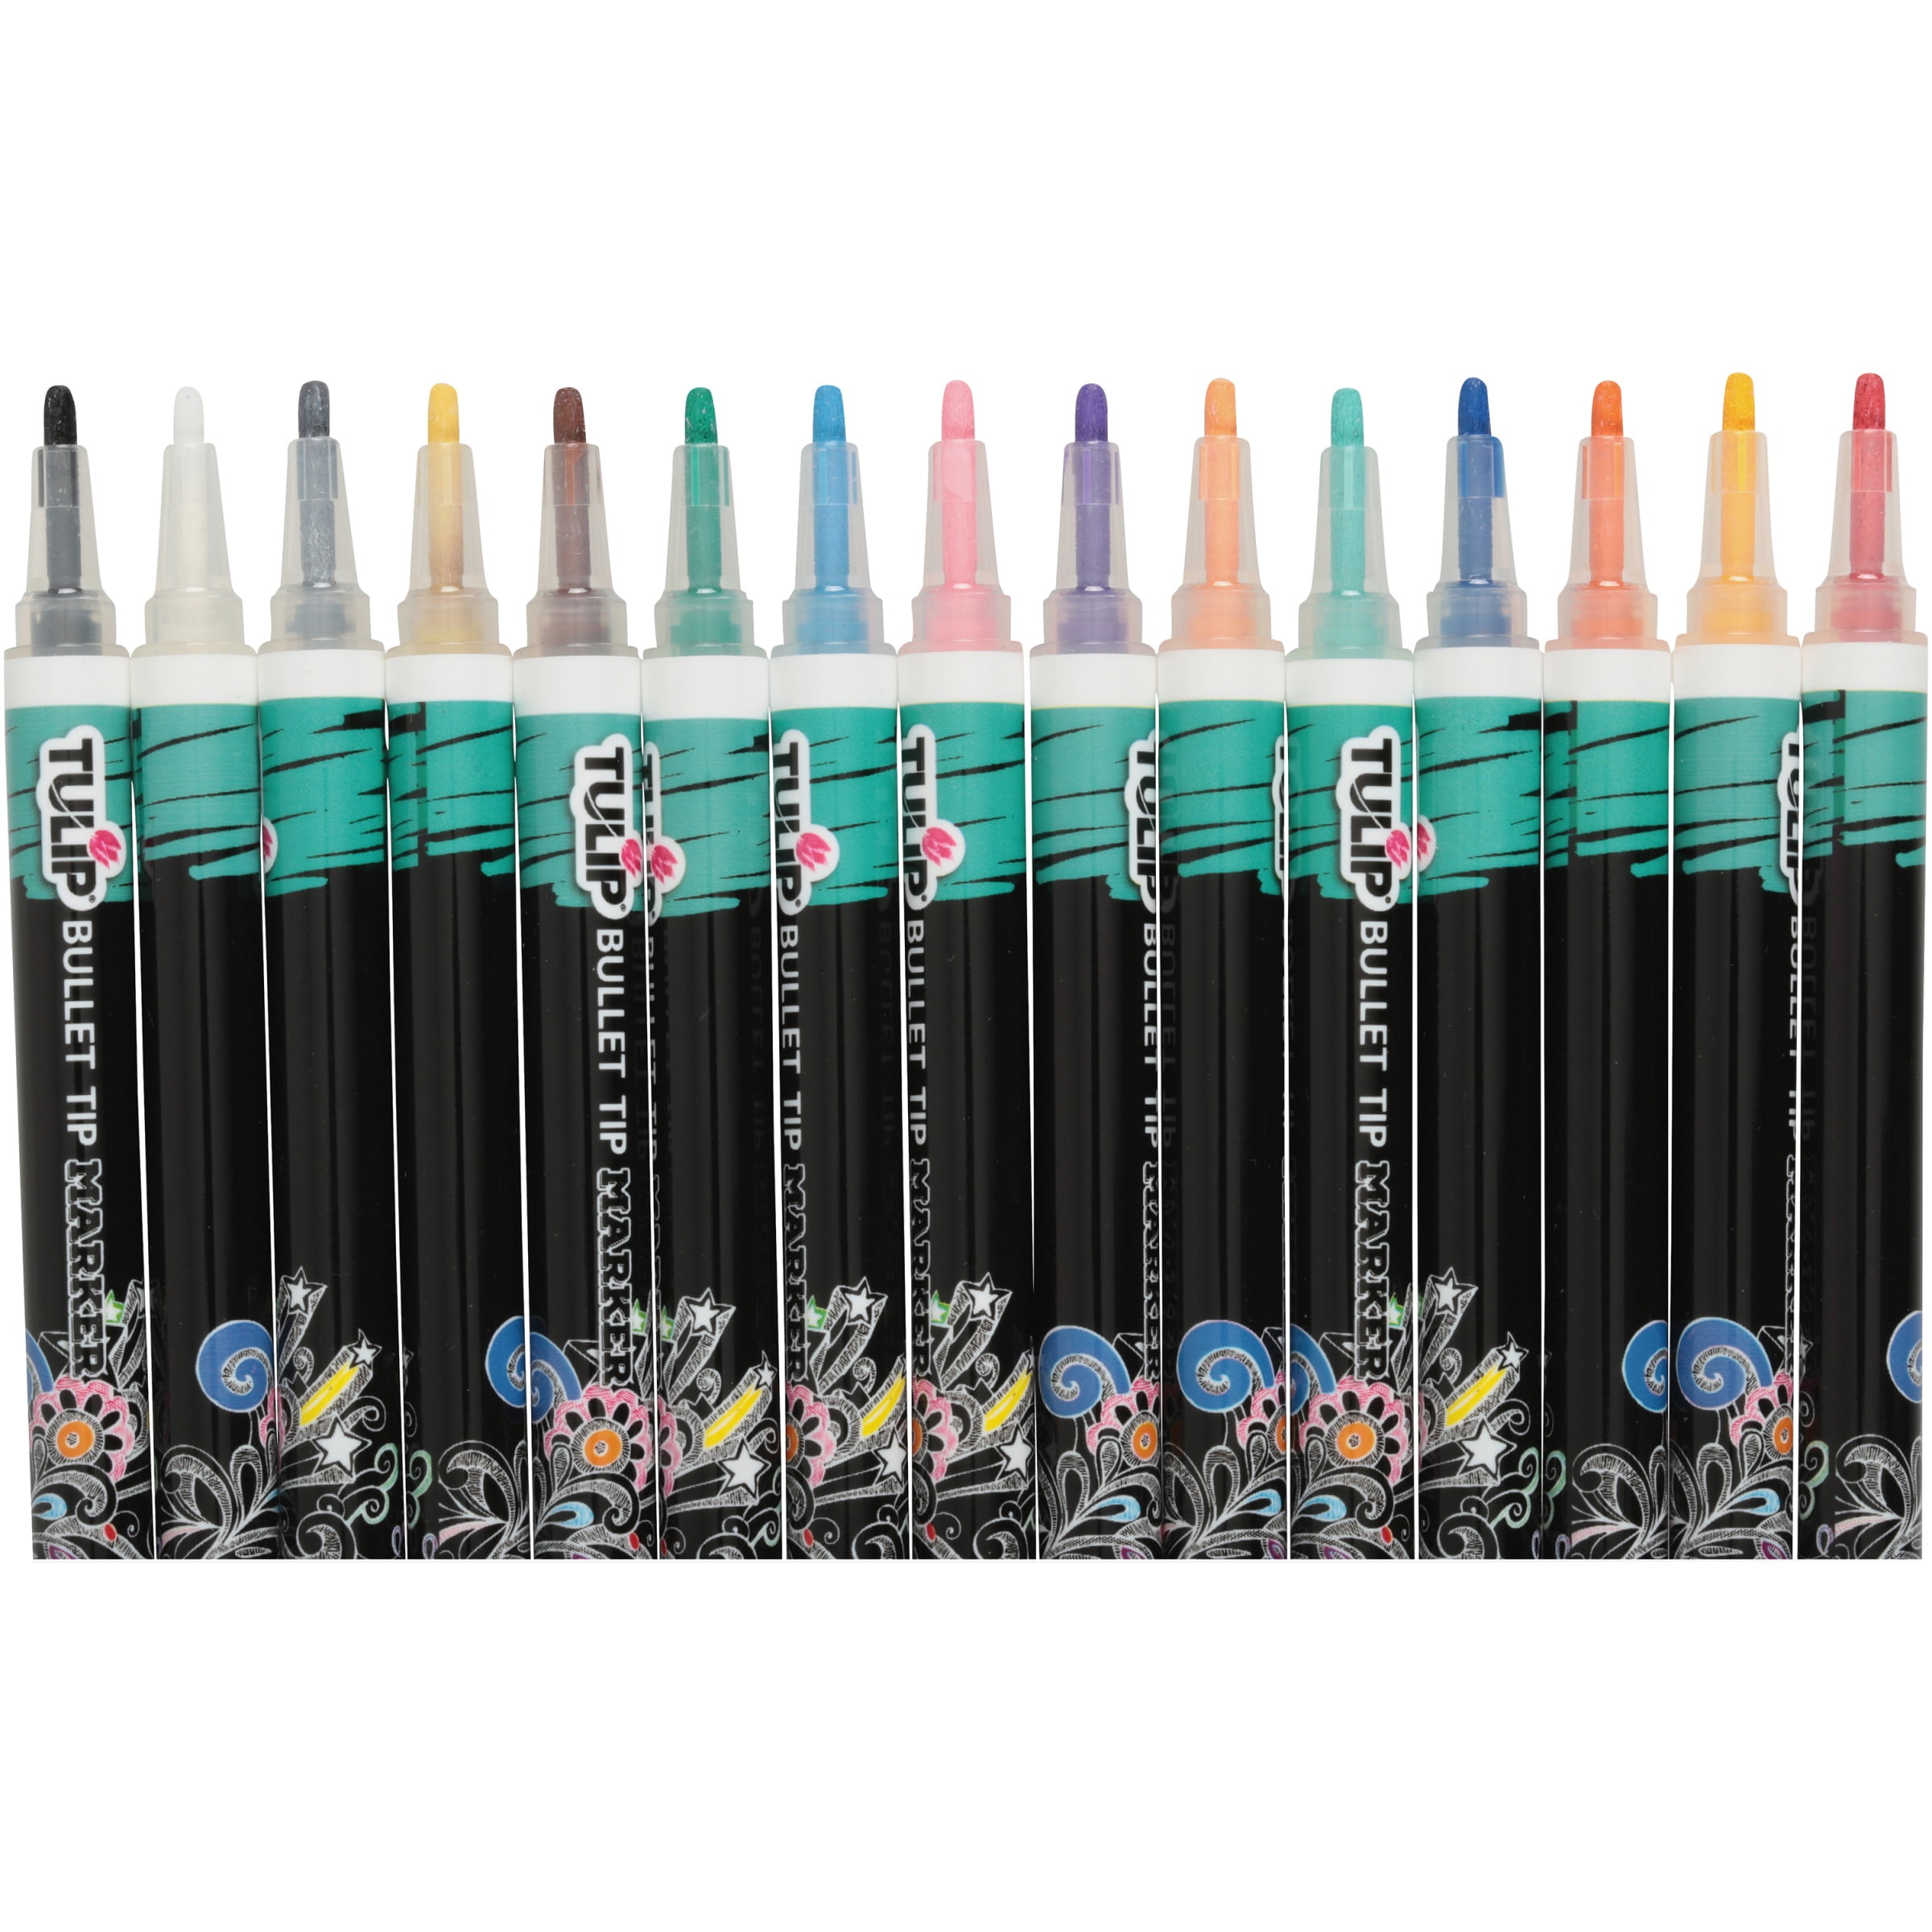 Tulip Bullet-Tip Fabric Paint Markers Rainbow 15 Pack – Tulip